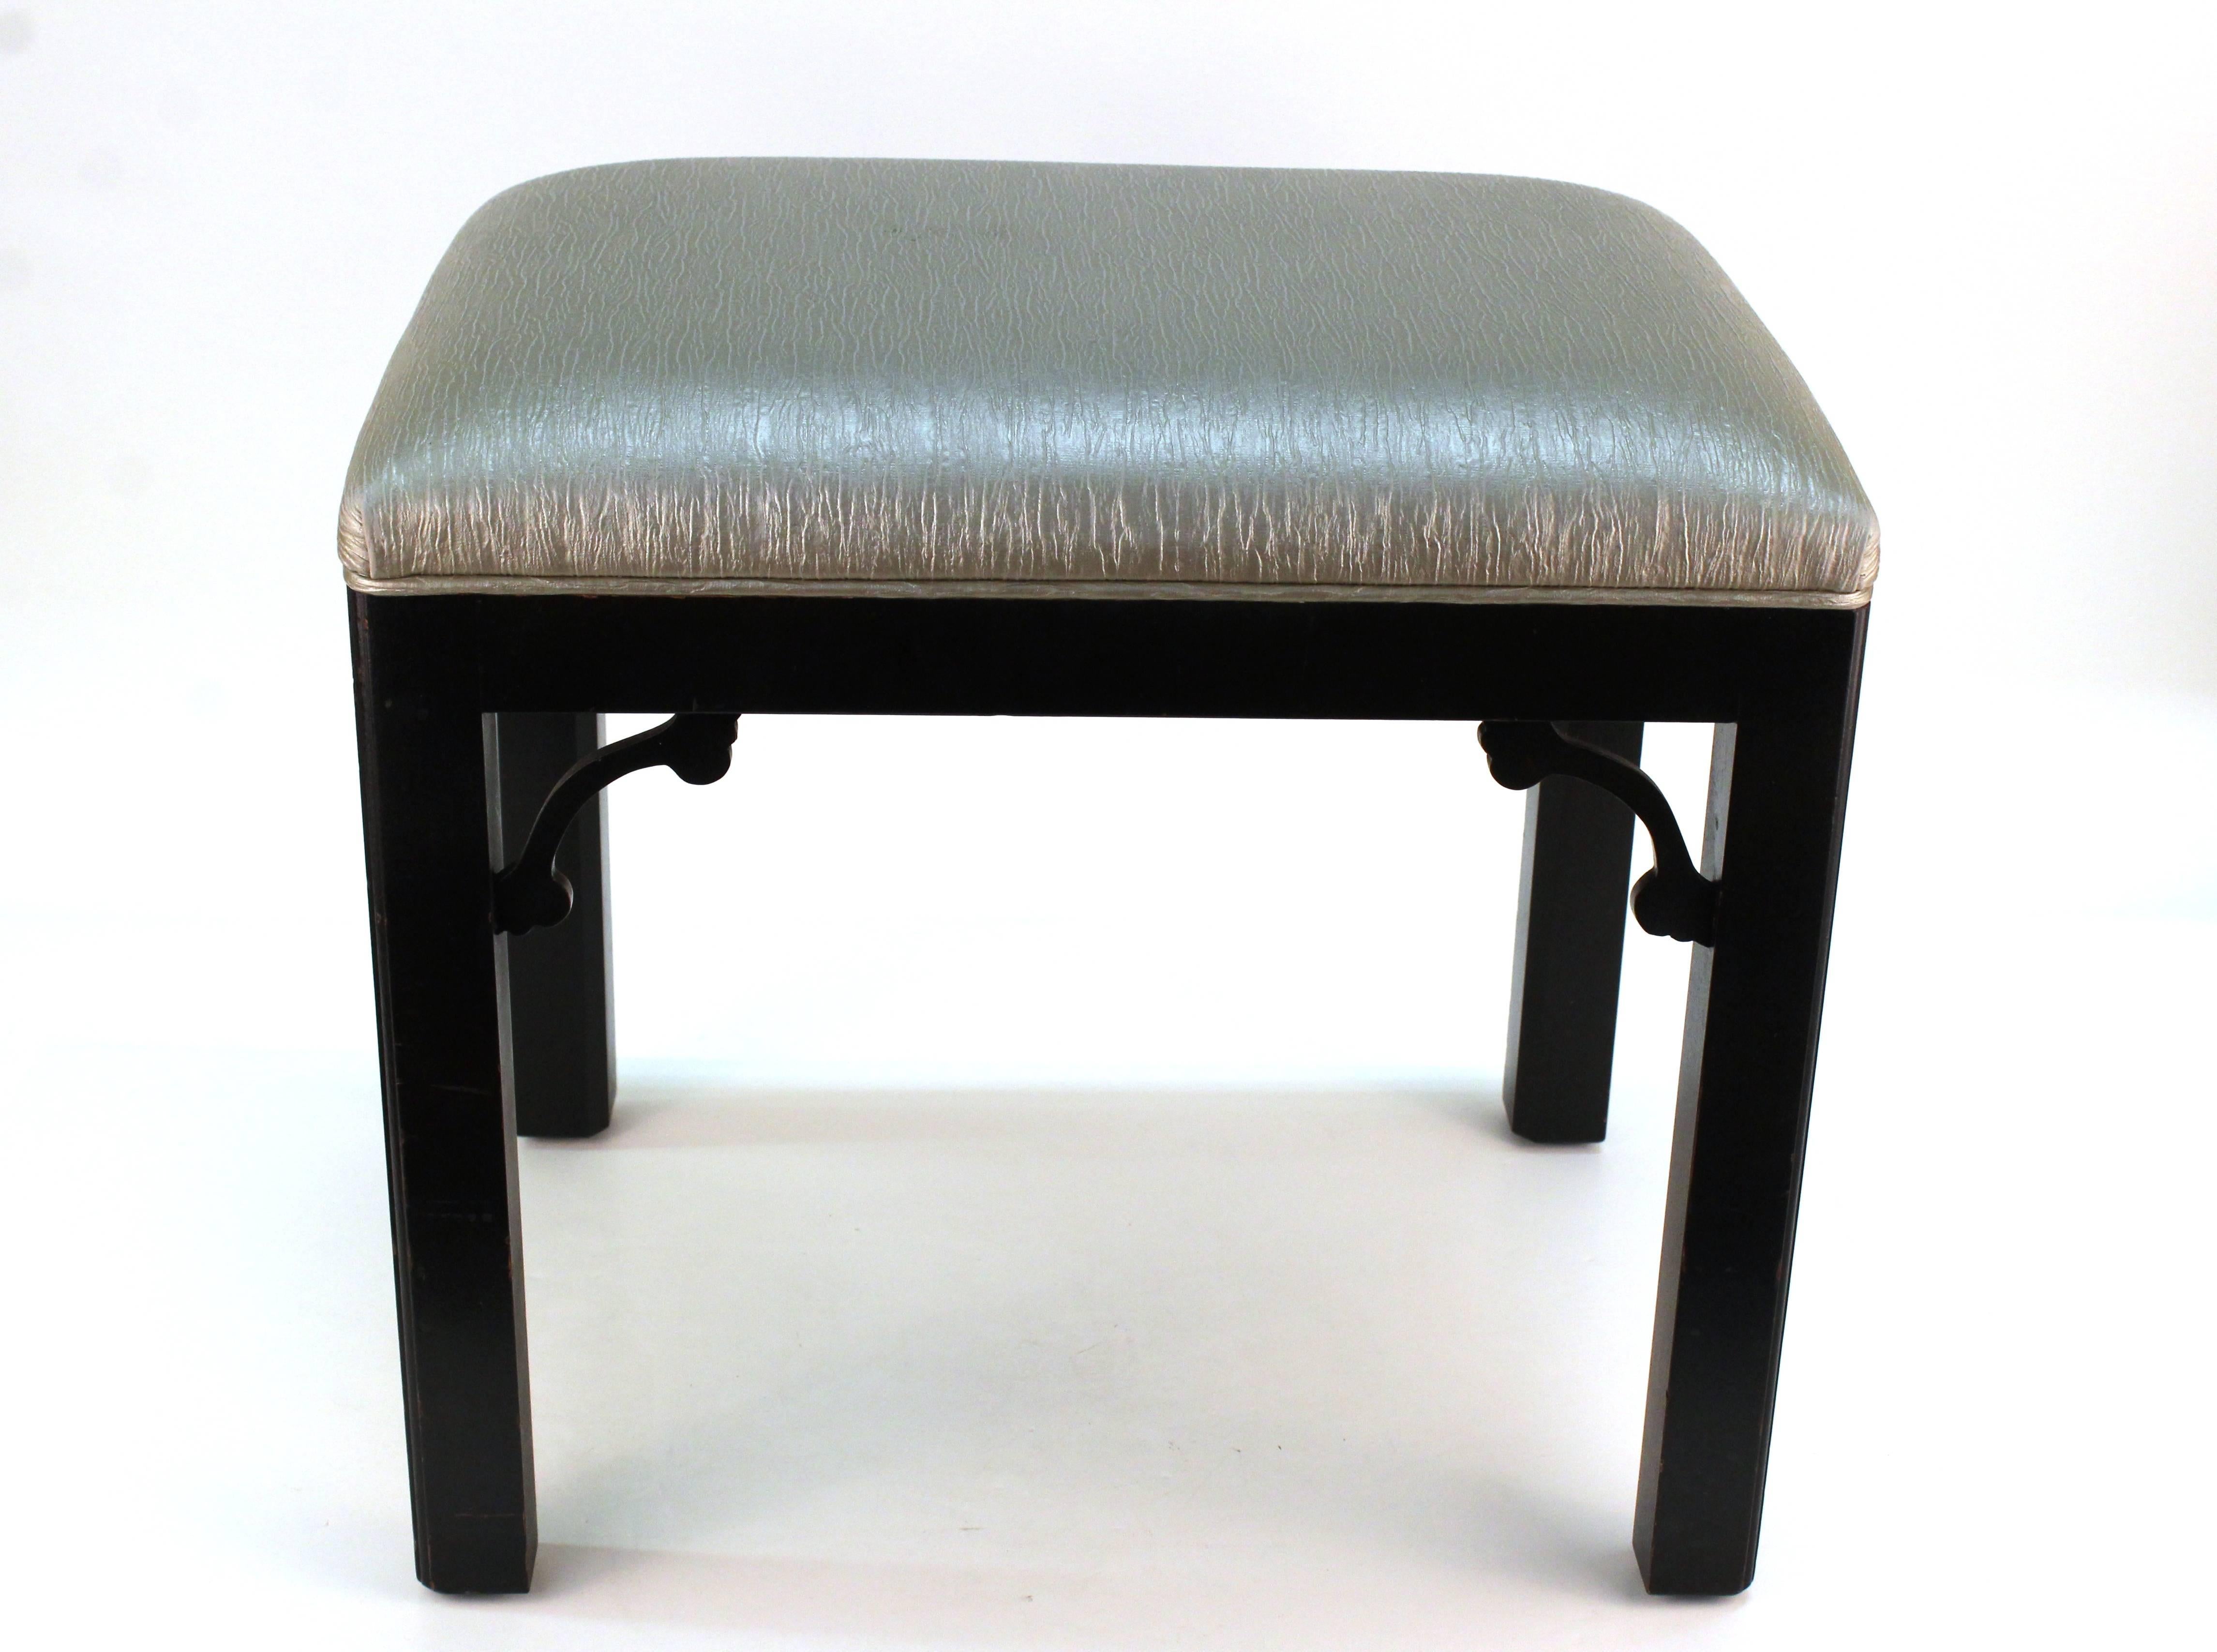 20th Century Asian Inspired Upholstered Stool